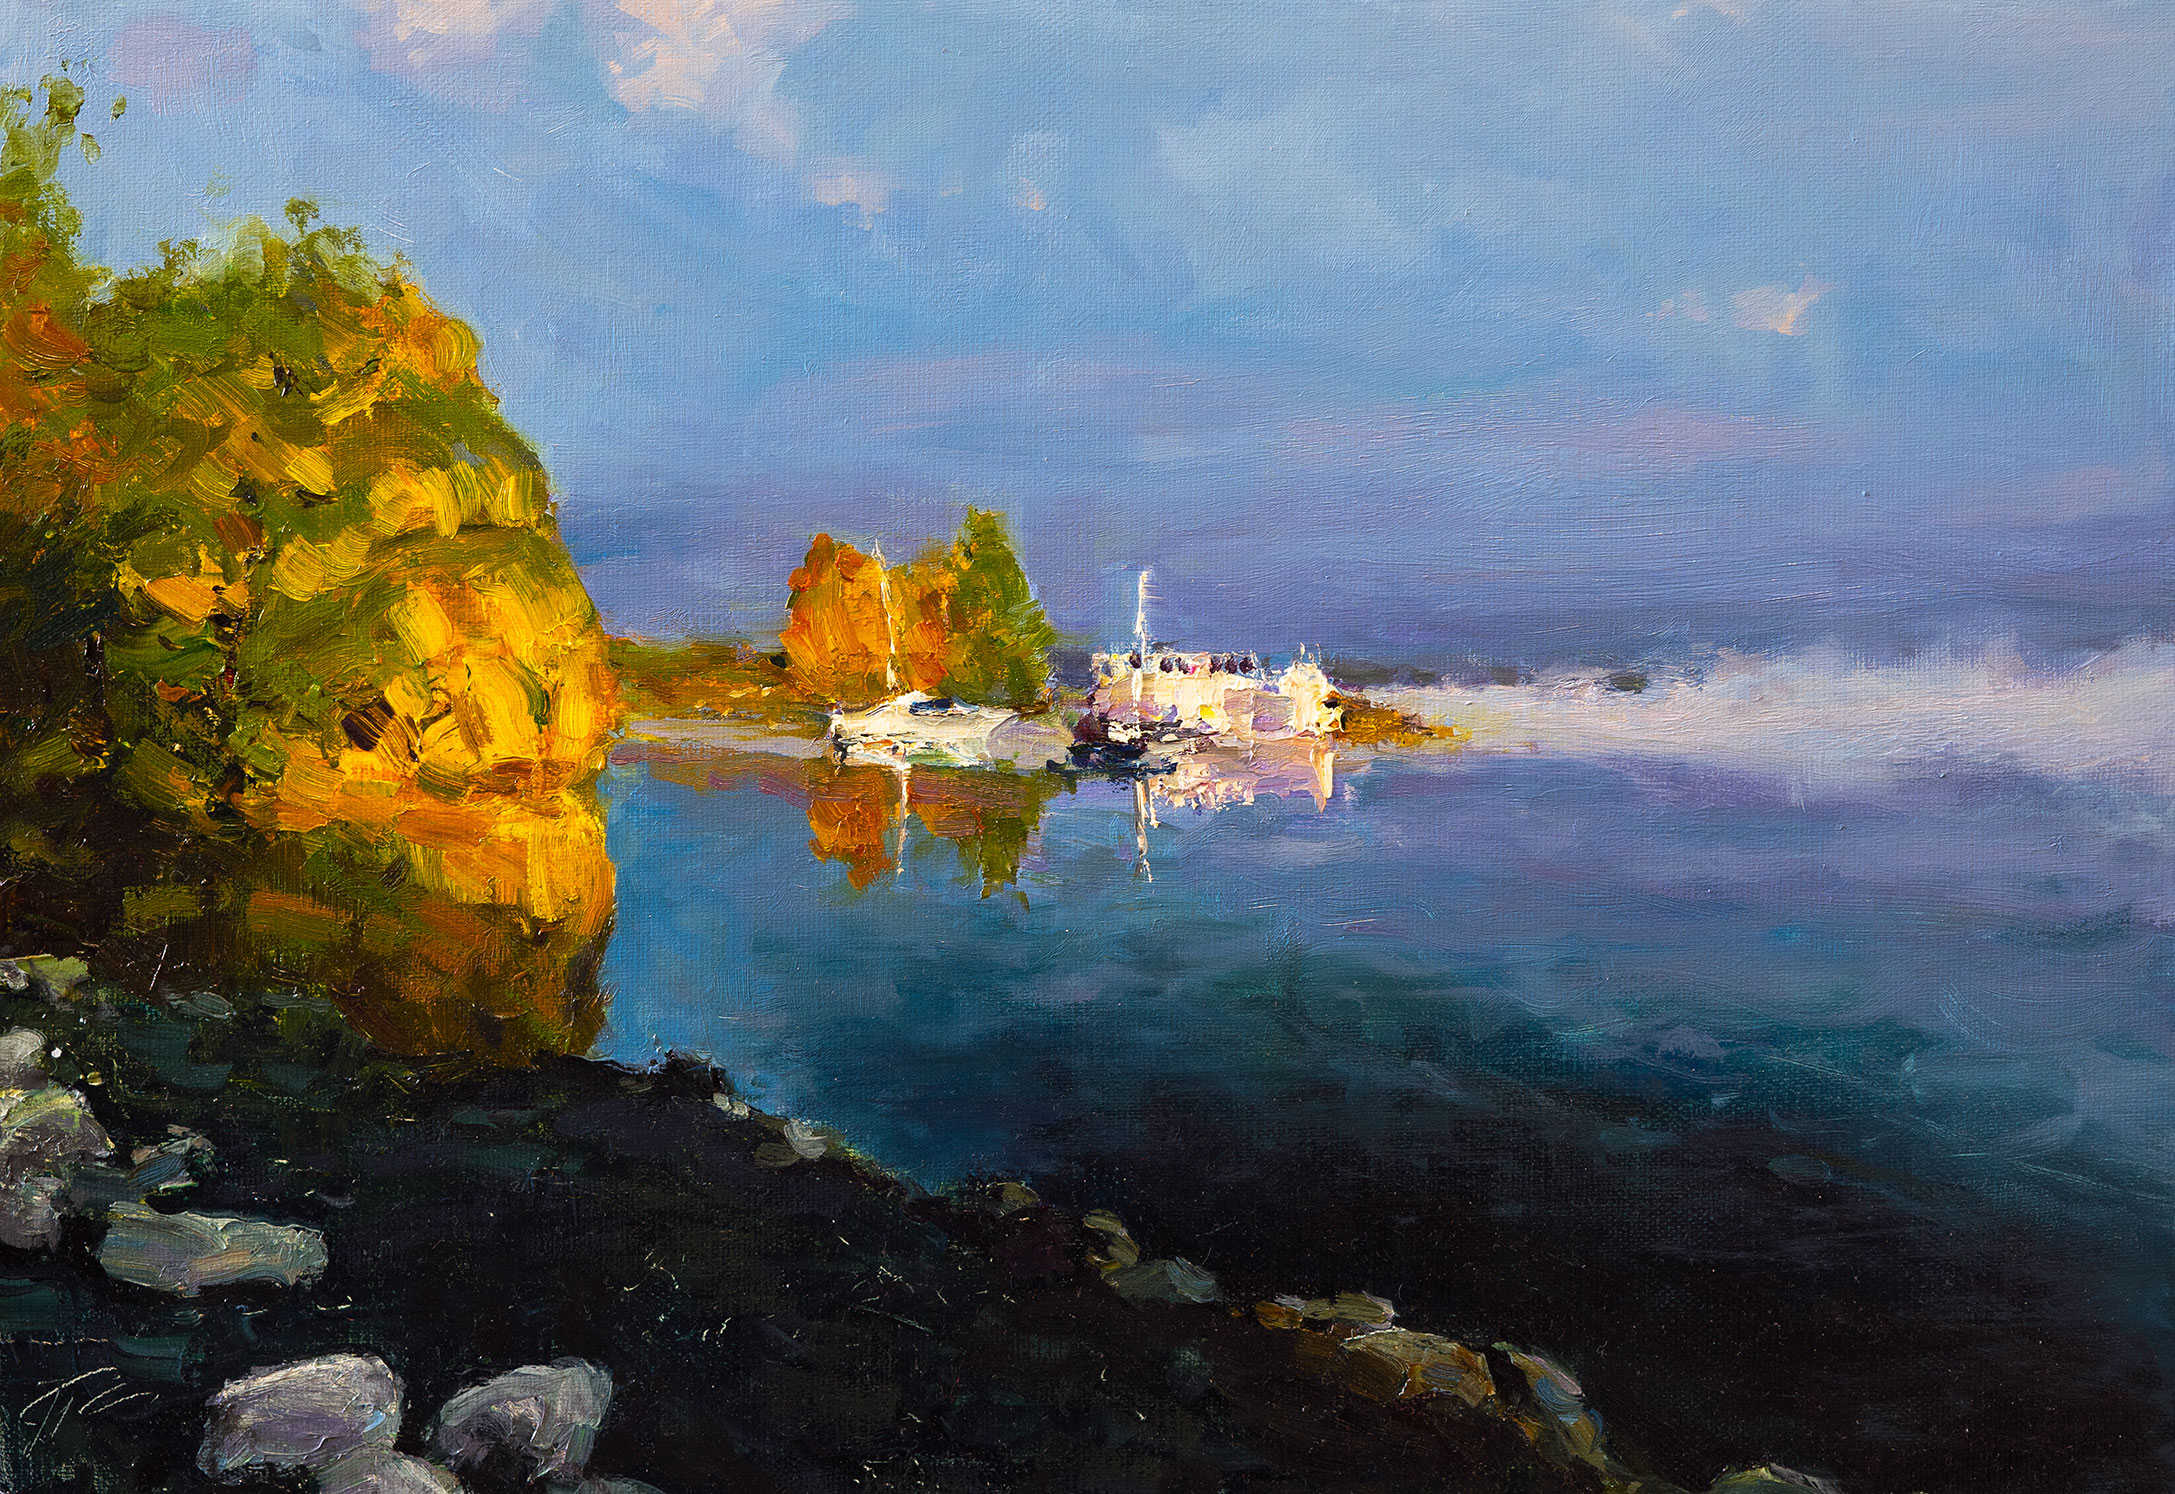 Foggy Evening on Shartash - 1, Sergei Prokhorov, Buy the painting Oil